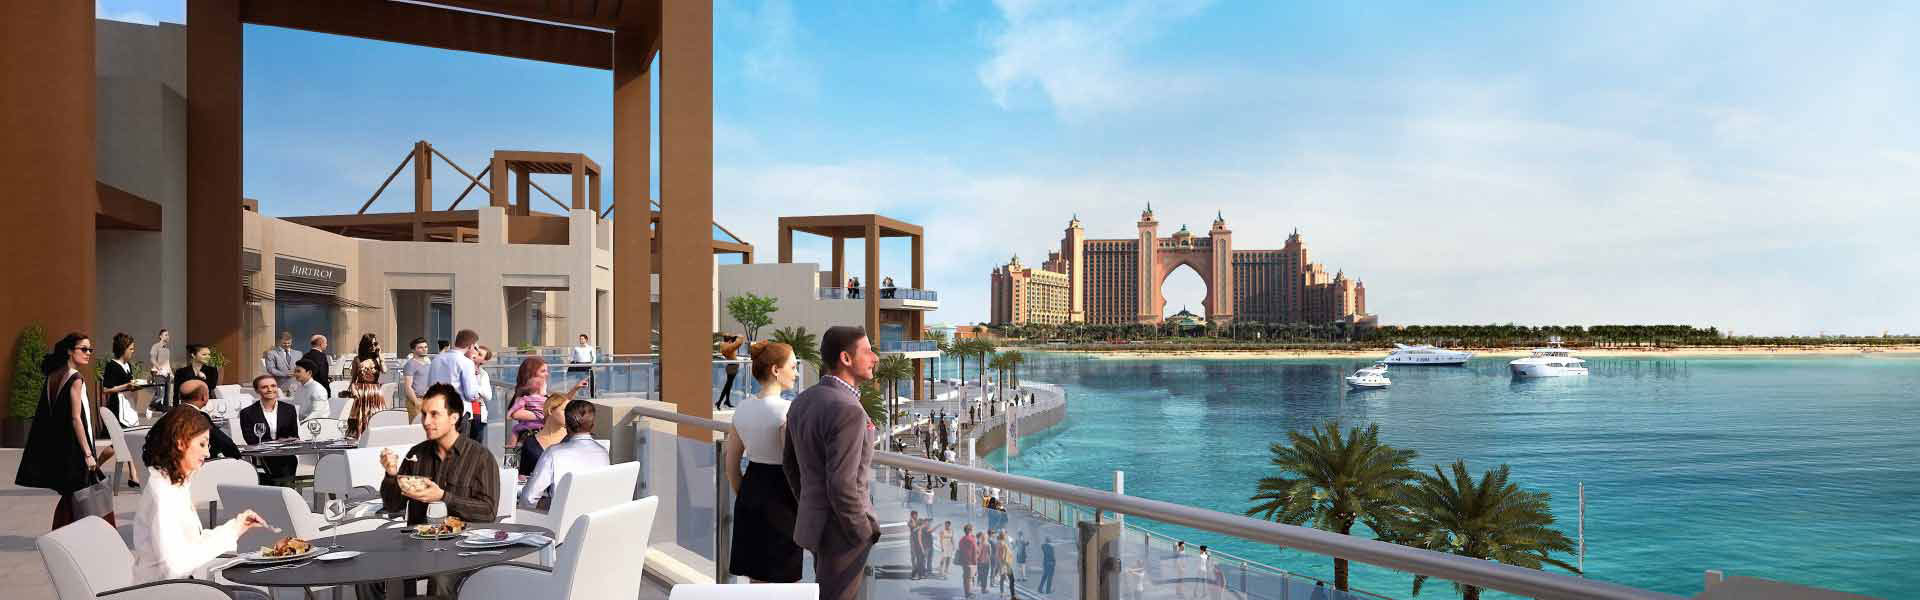 Banner Γραφική εικόνα του ξενοδοχείου Atlantis και των ανθρώπων που απολαμβάνουν τη θέα από απόσταση